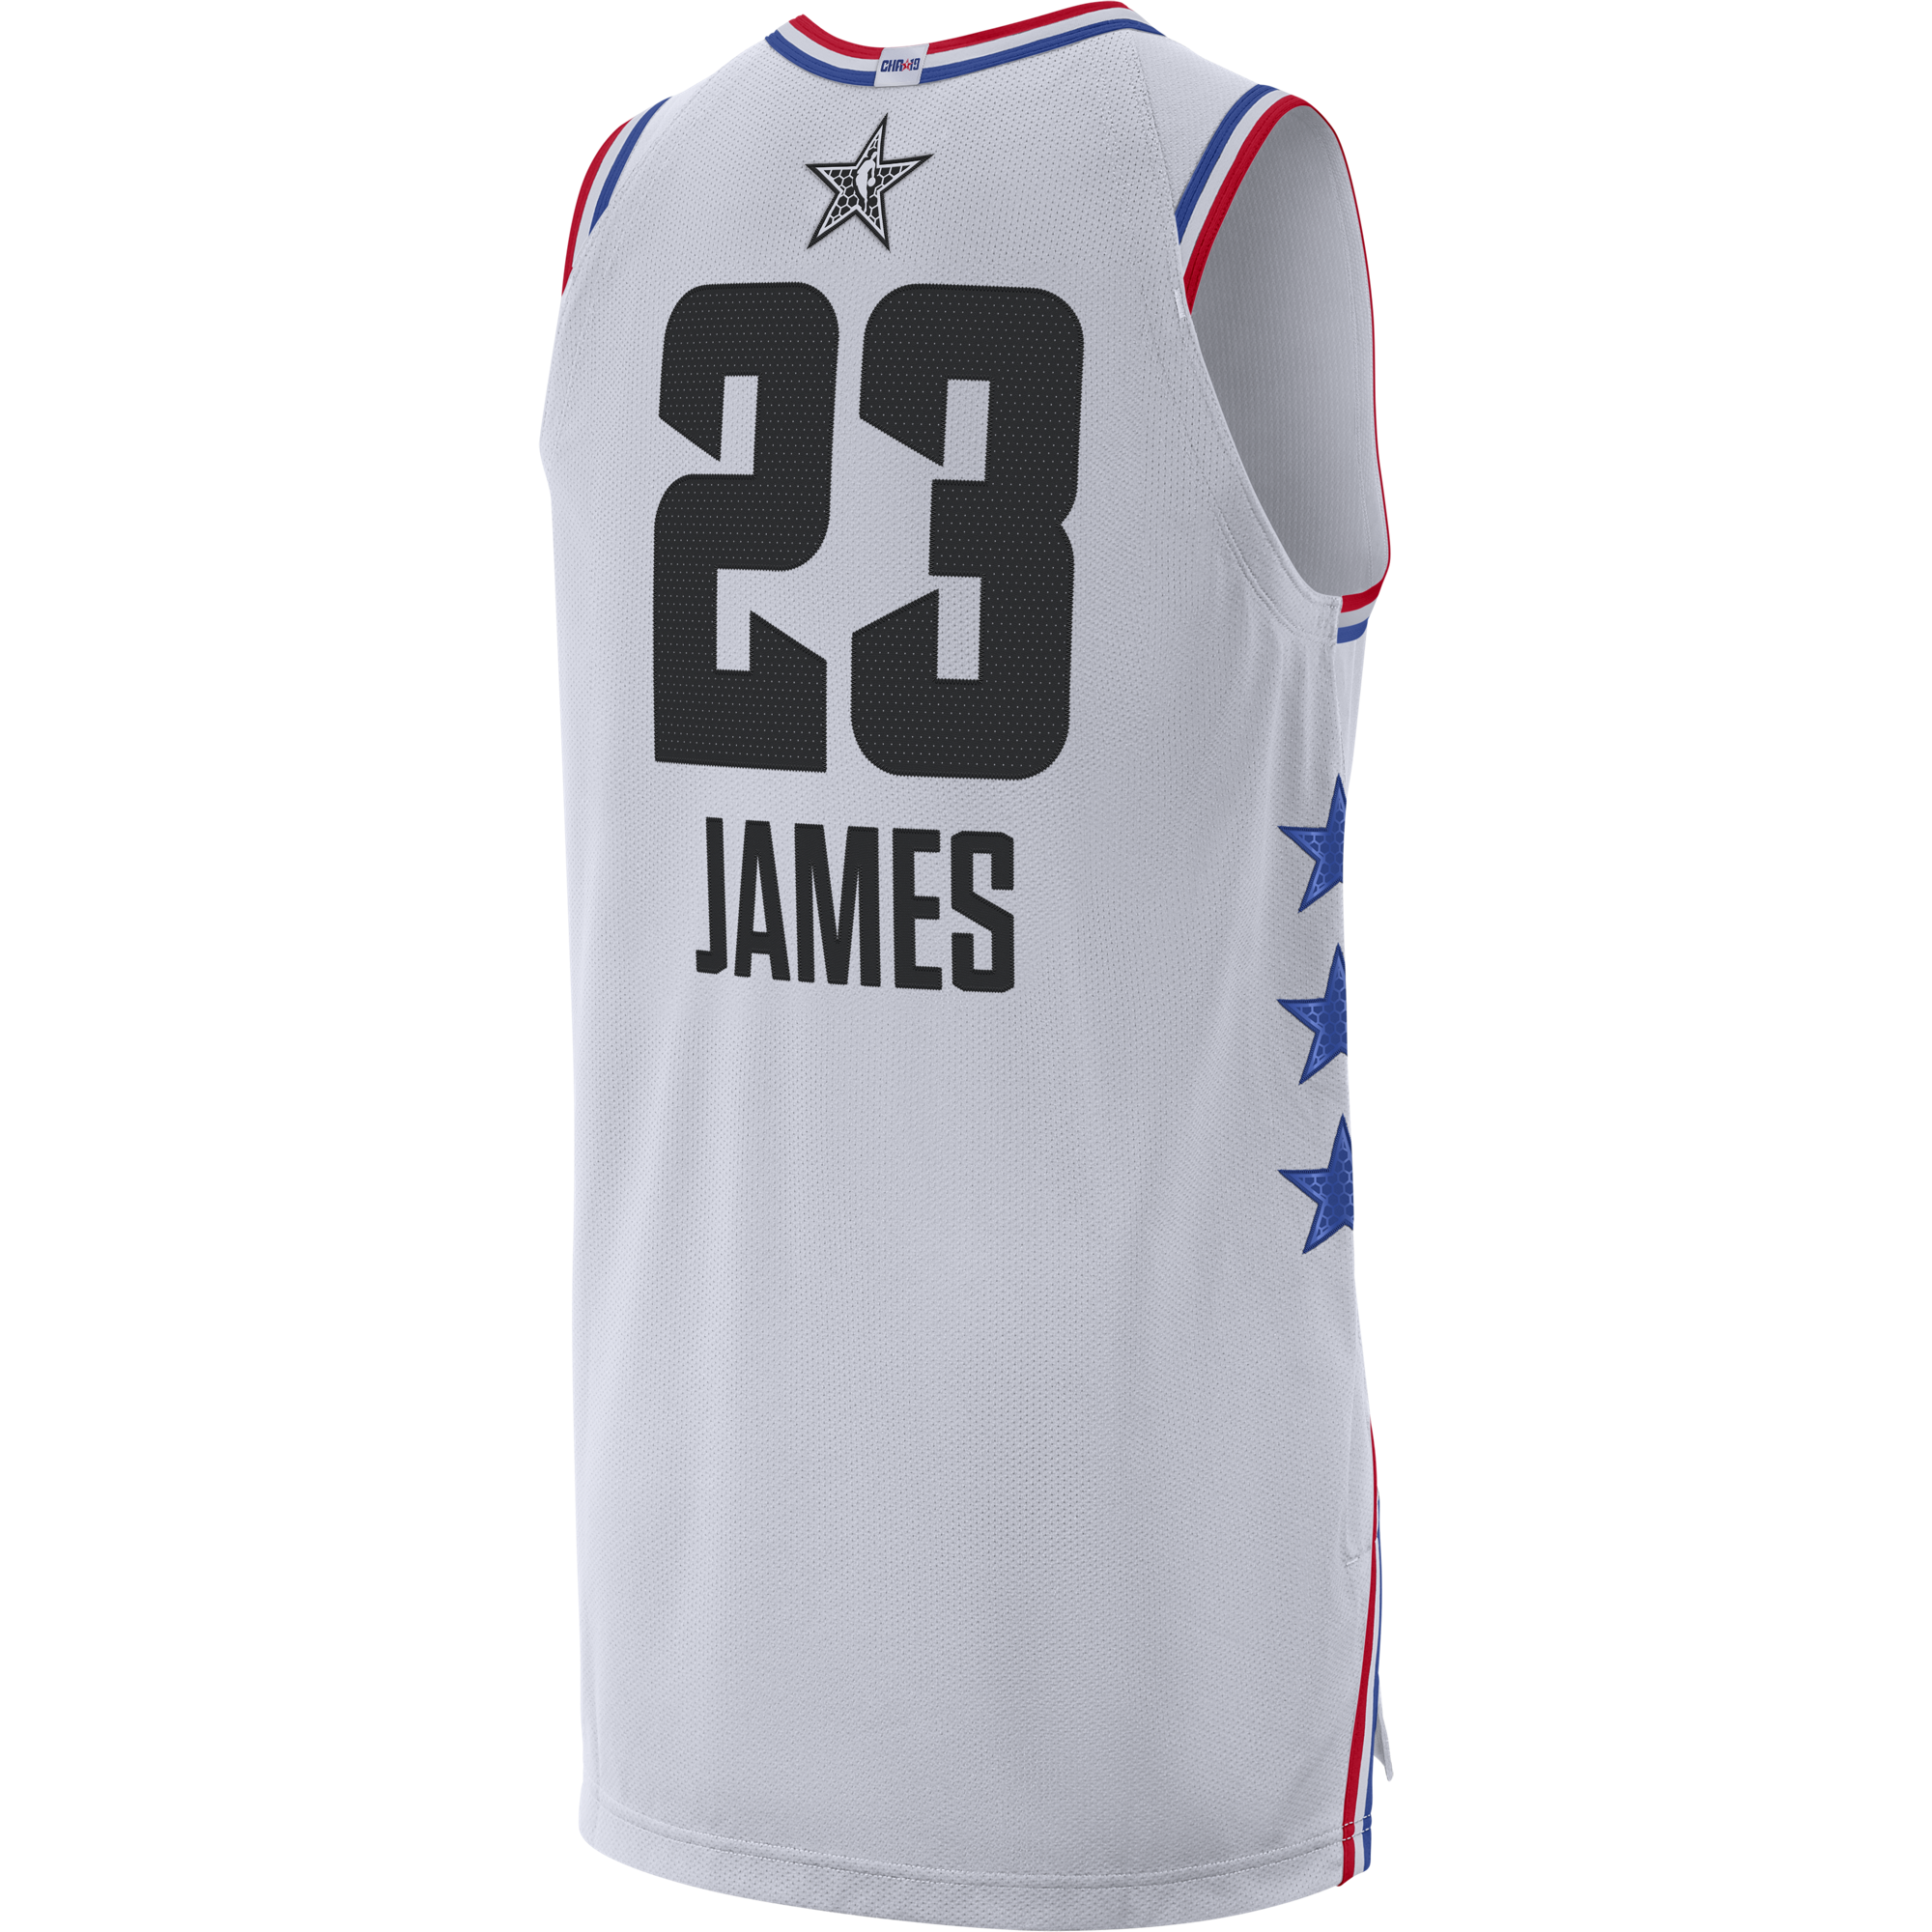 NIKE AIR JORDAN NBA ALL STAR WEEKEND 2019 LEBRON JAMES AUTHENTIC JERSEY  BLACK price €179.00